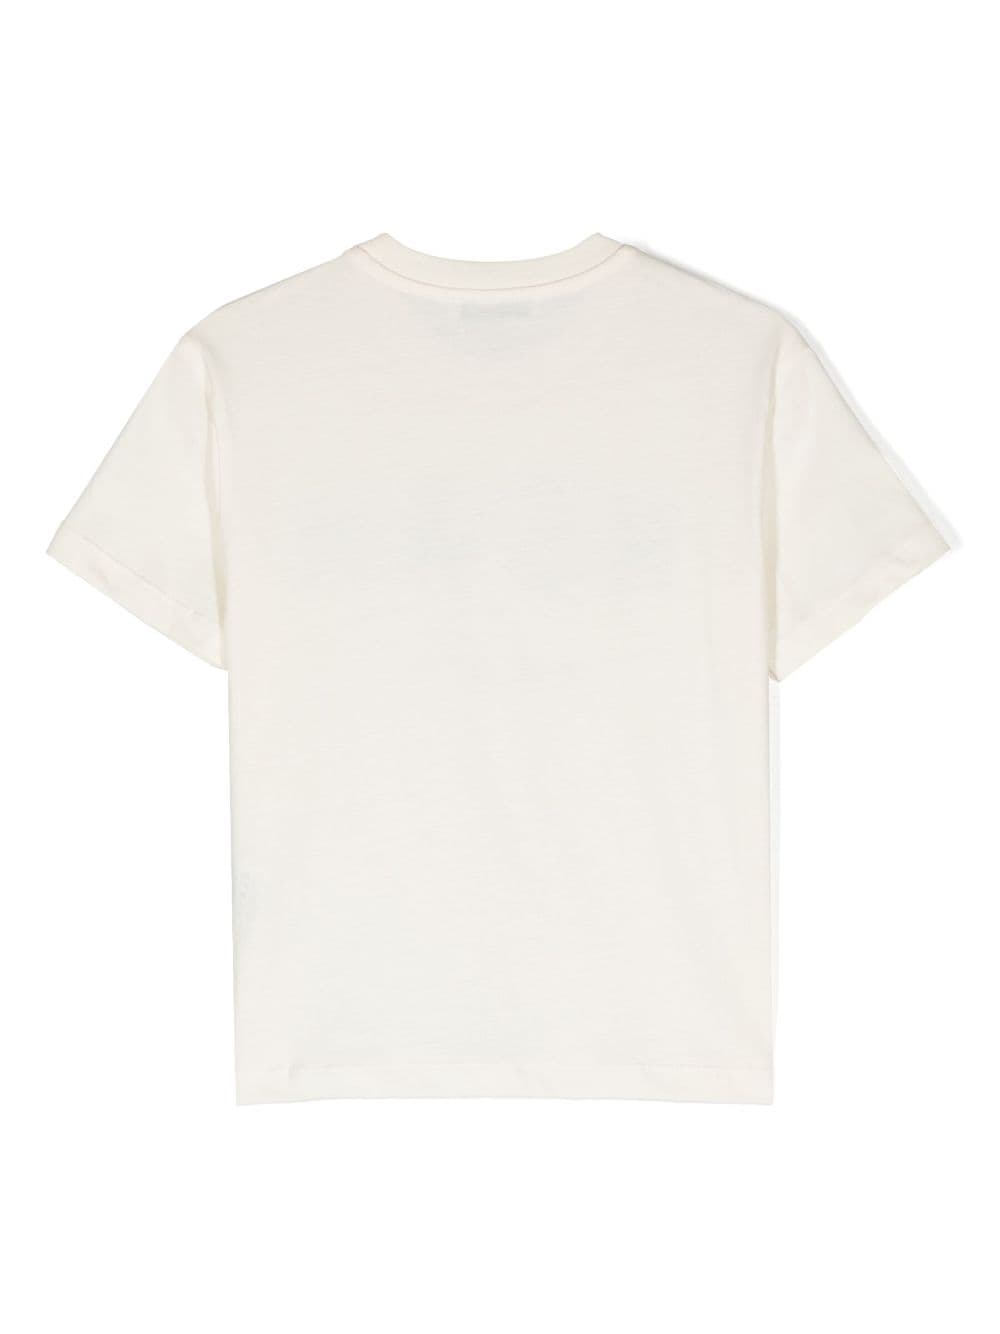 Cream cotton jersey boy MSGM t-shirt | Carofiglio Junior